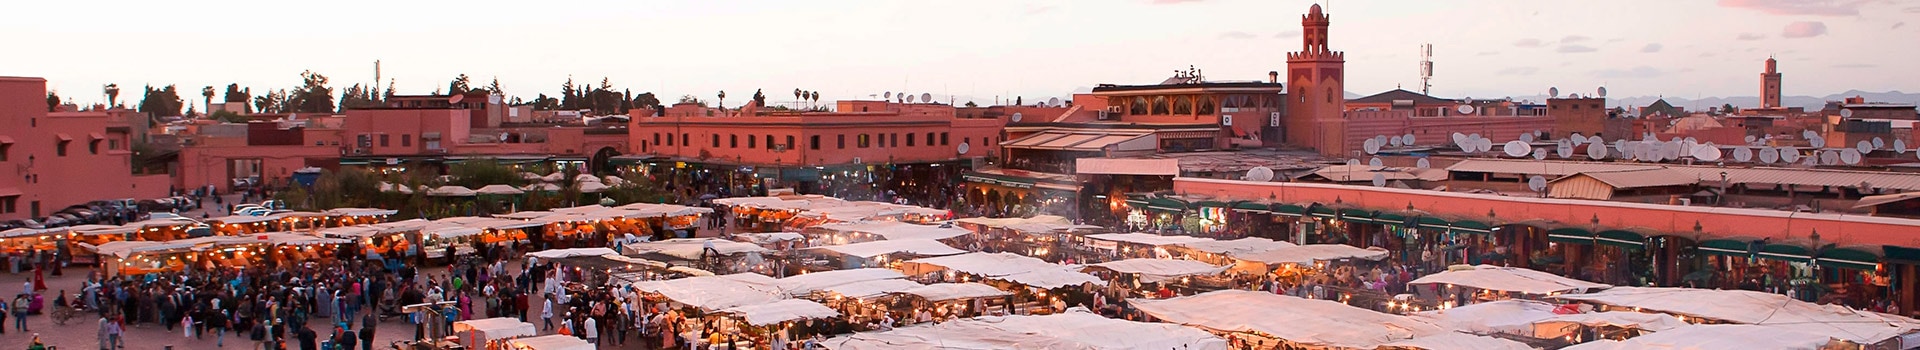 Bergamo - Marrakech